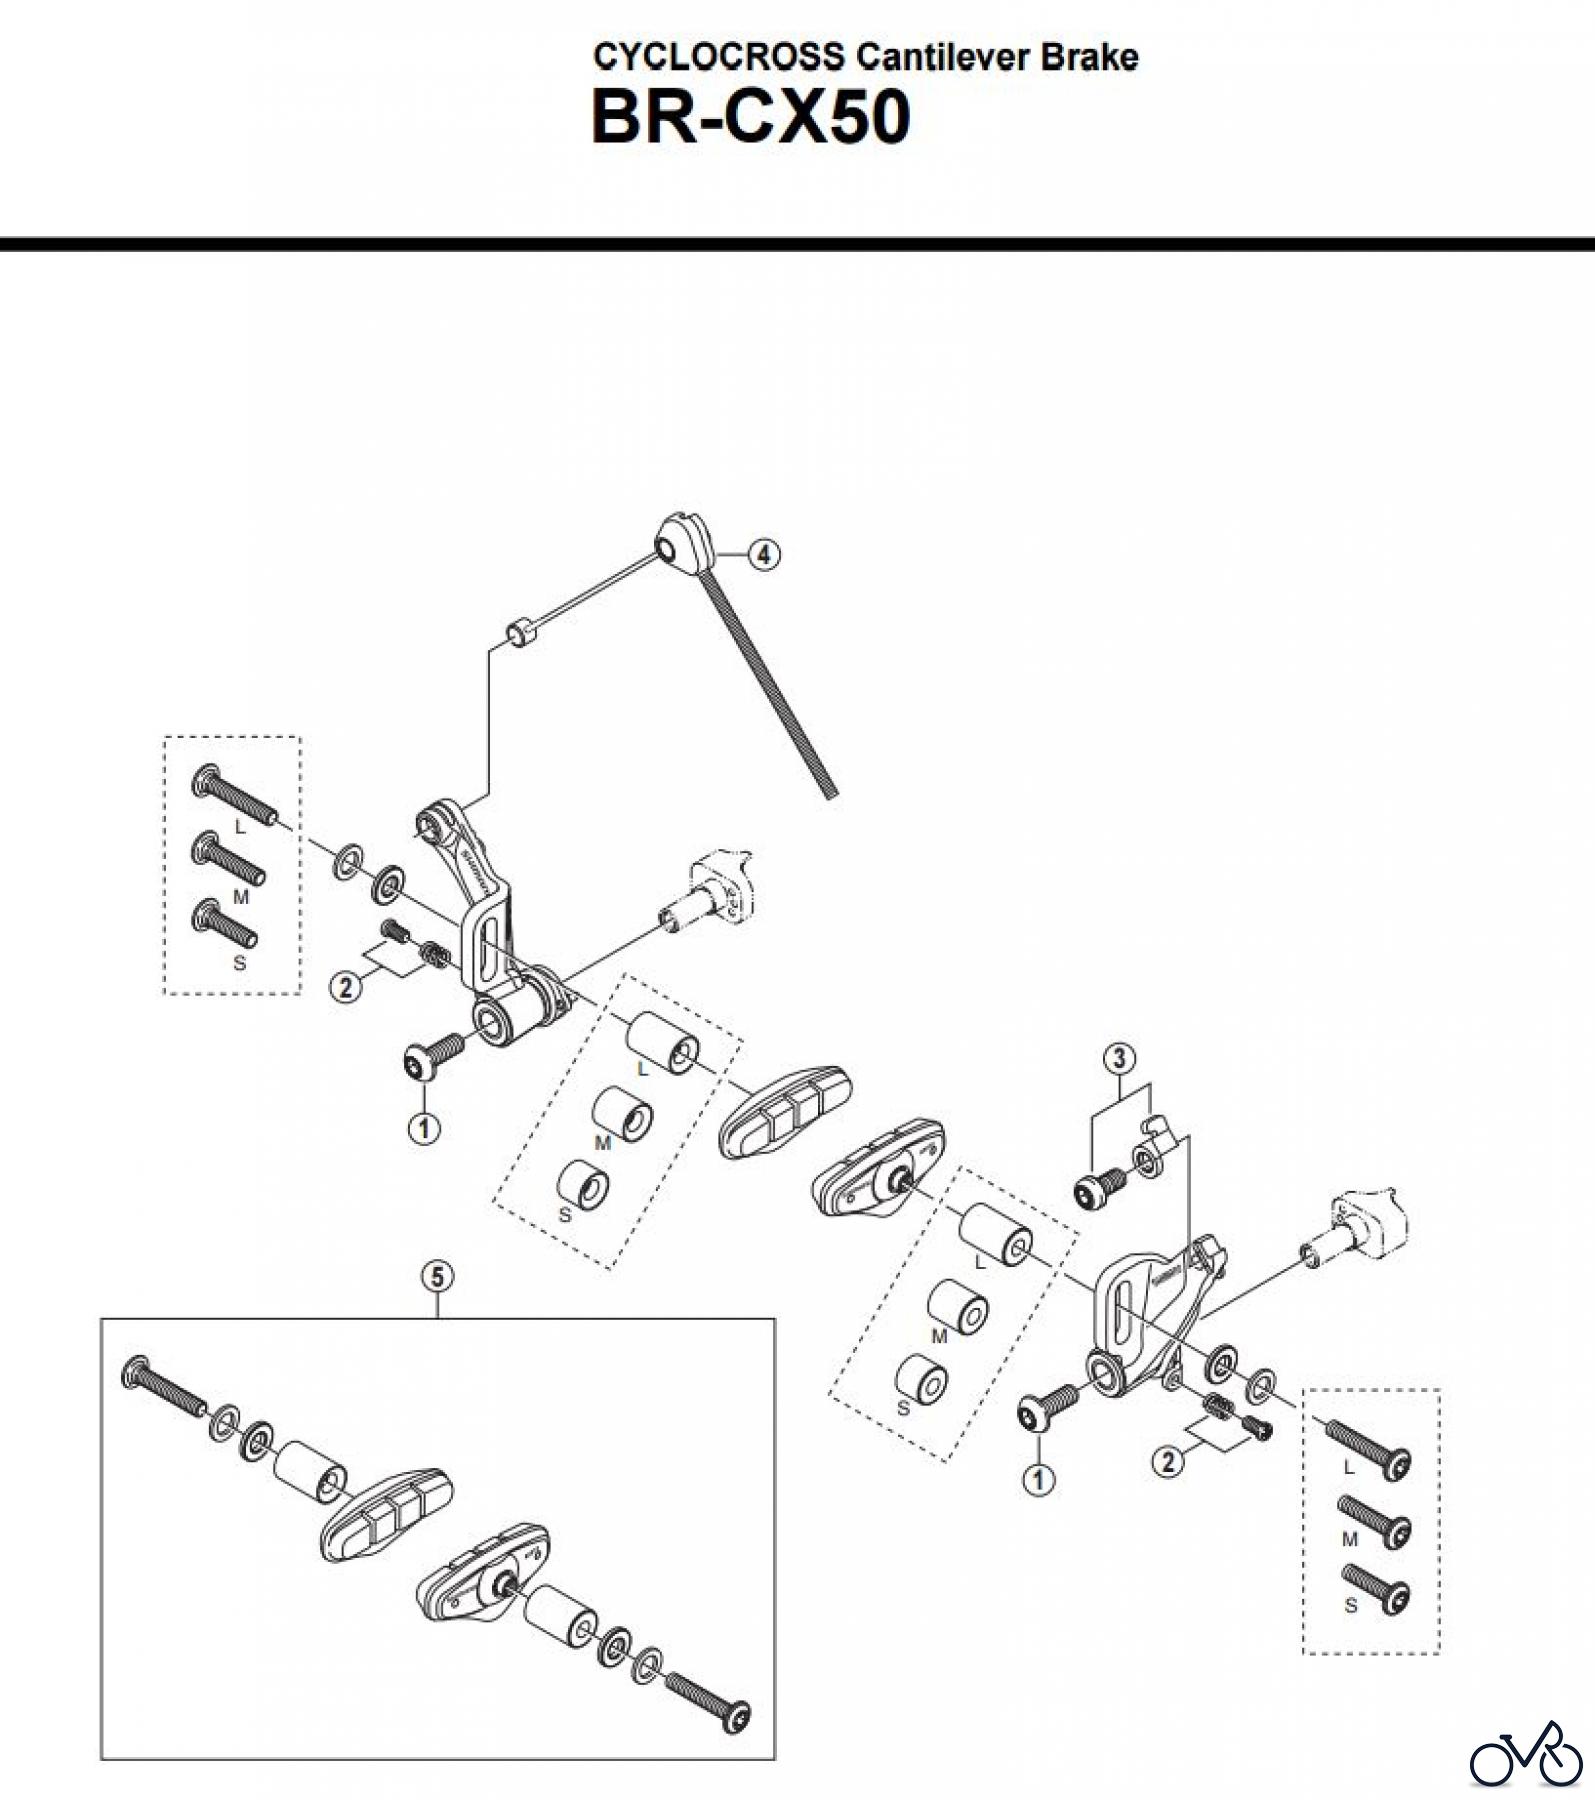  Shimano BR Brake - Bremse BR-CX50 -3222 CYCLOCROSS Cantilever Brake